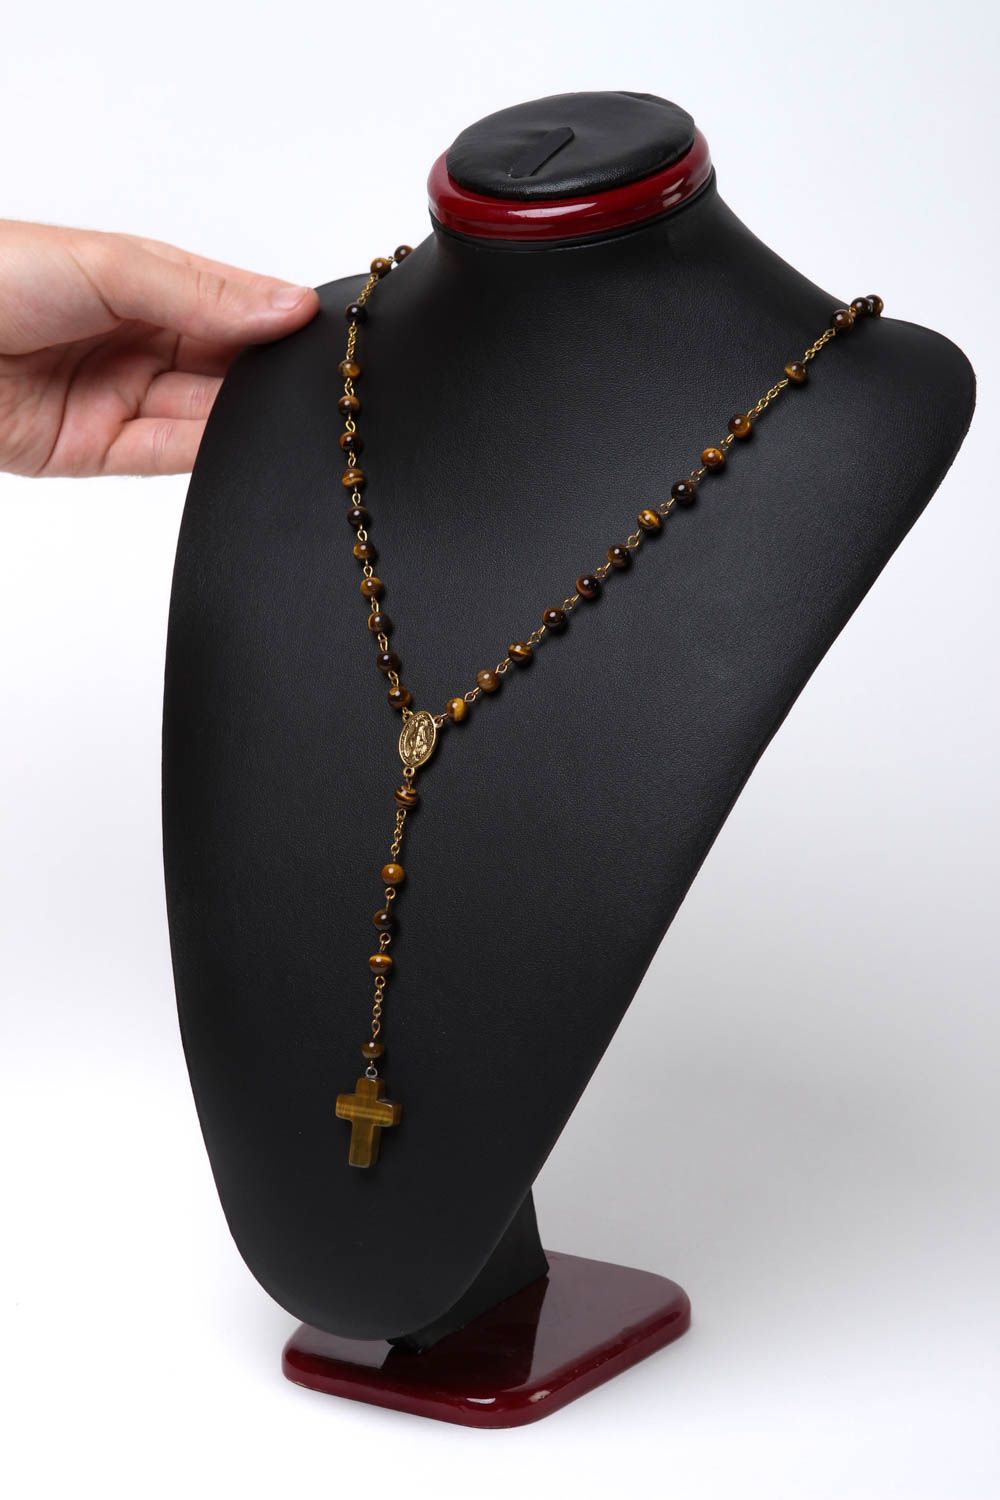 Handmade bead necklace designer rosary gift ideas natural stones accessory photo 5